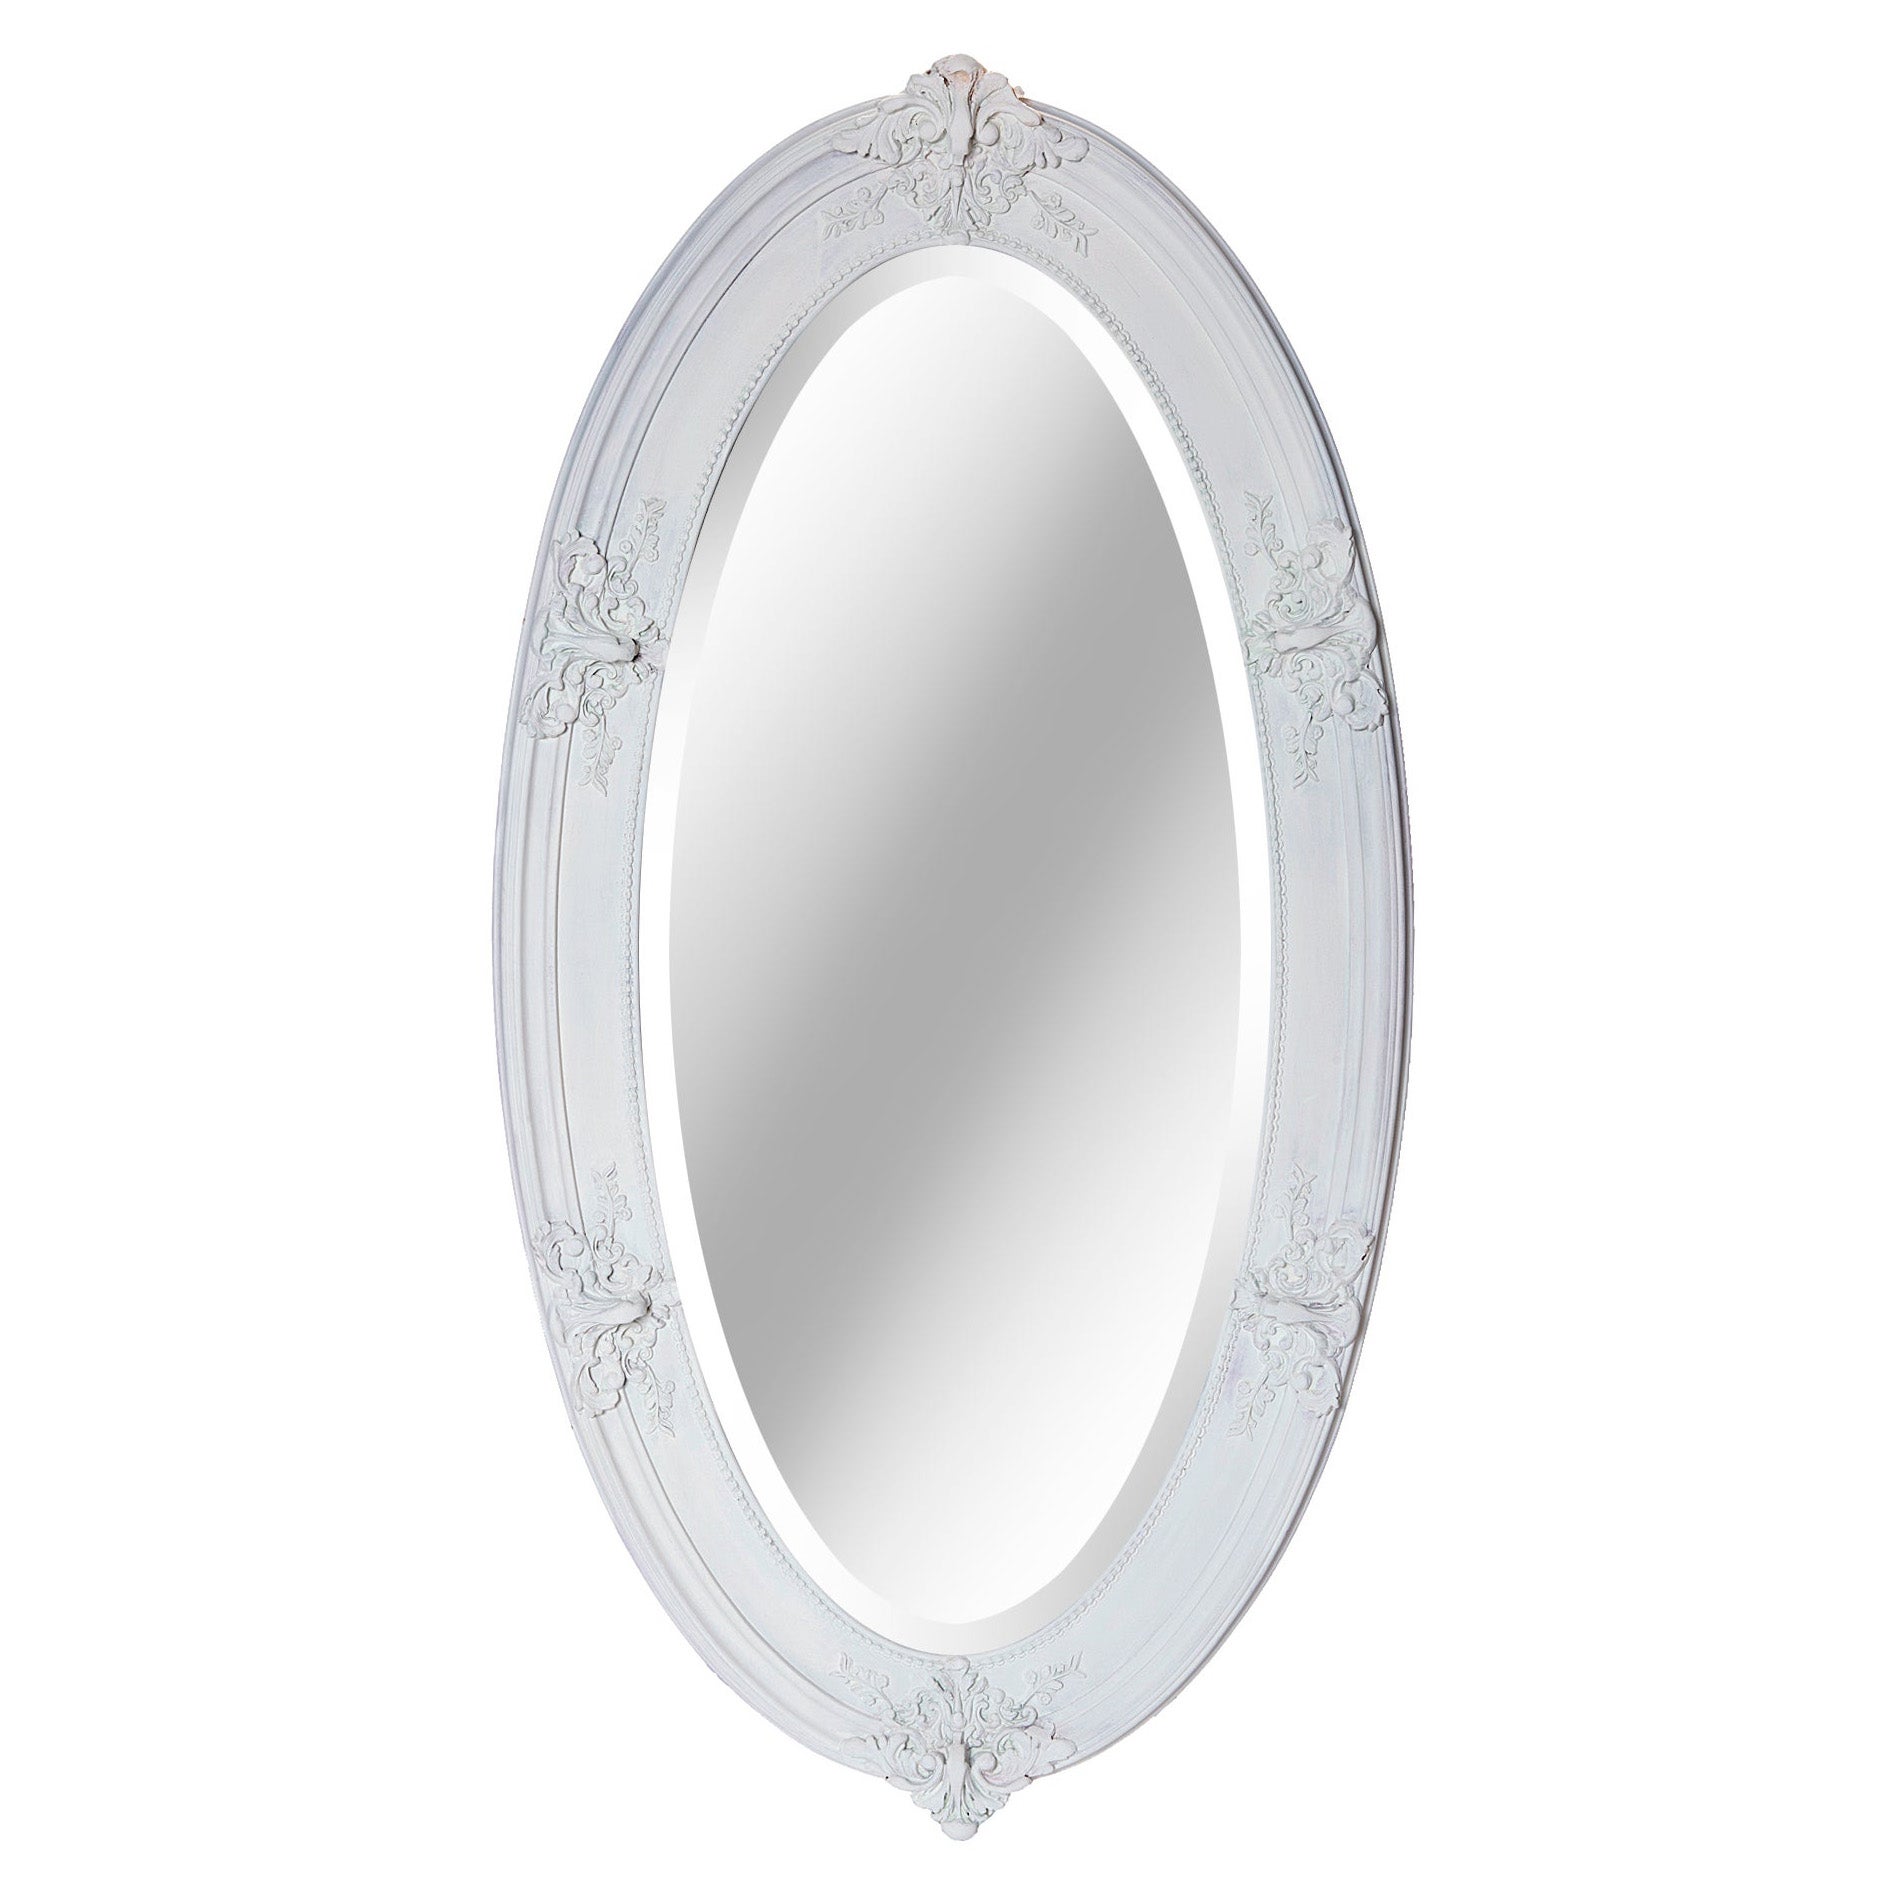 Victorian Beveled Oval Mirror